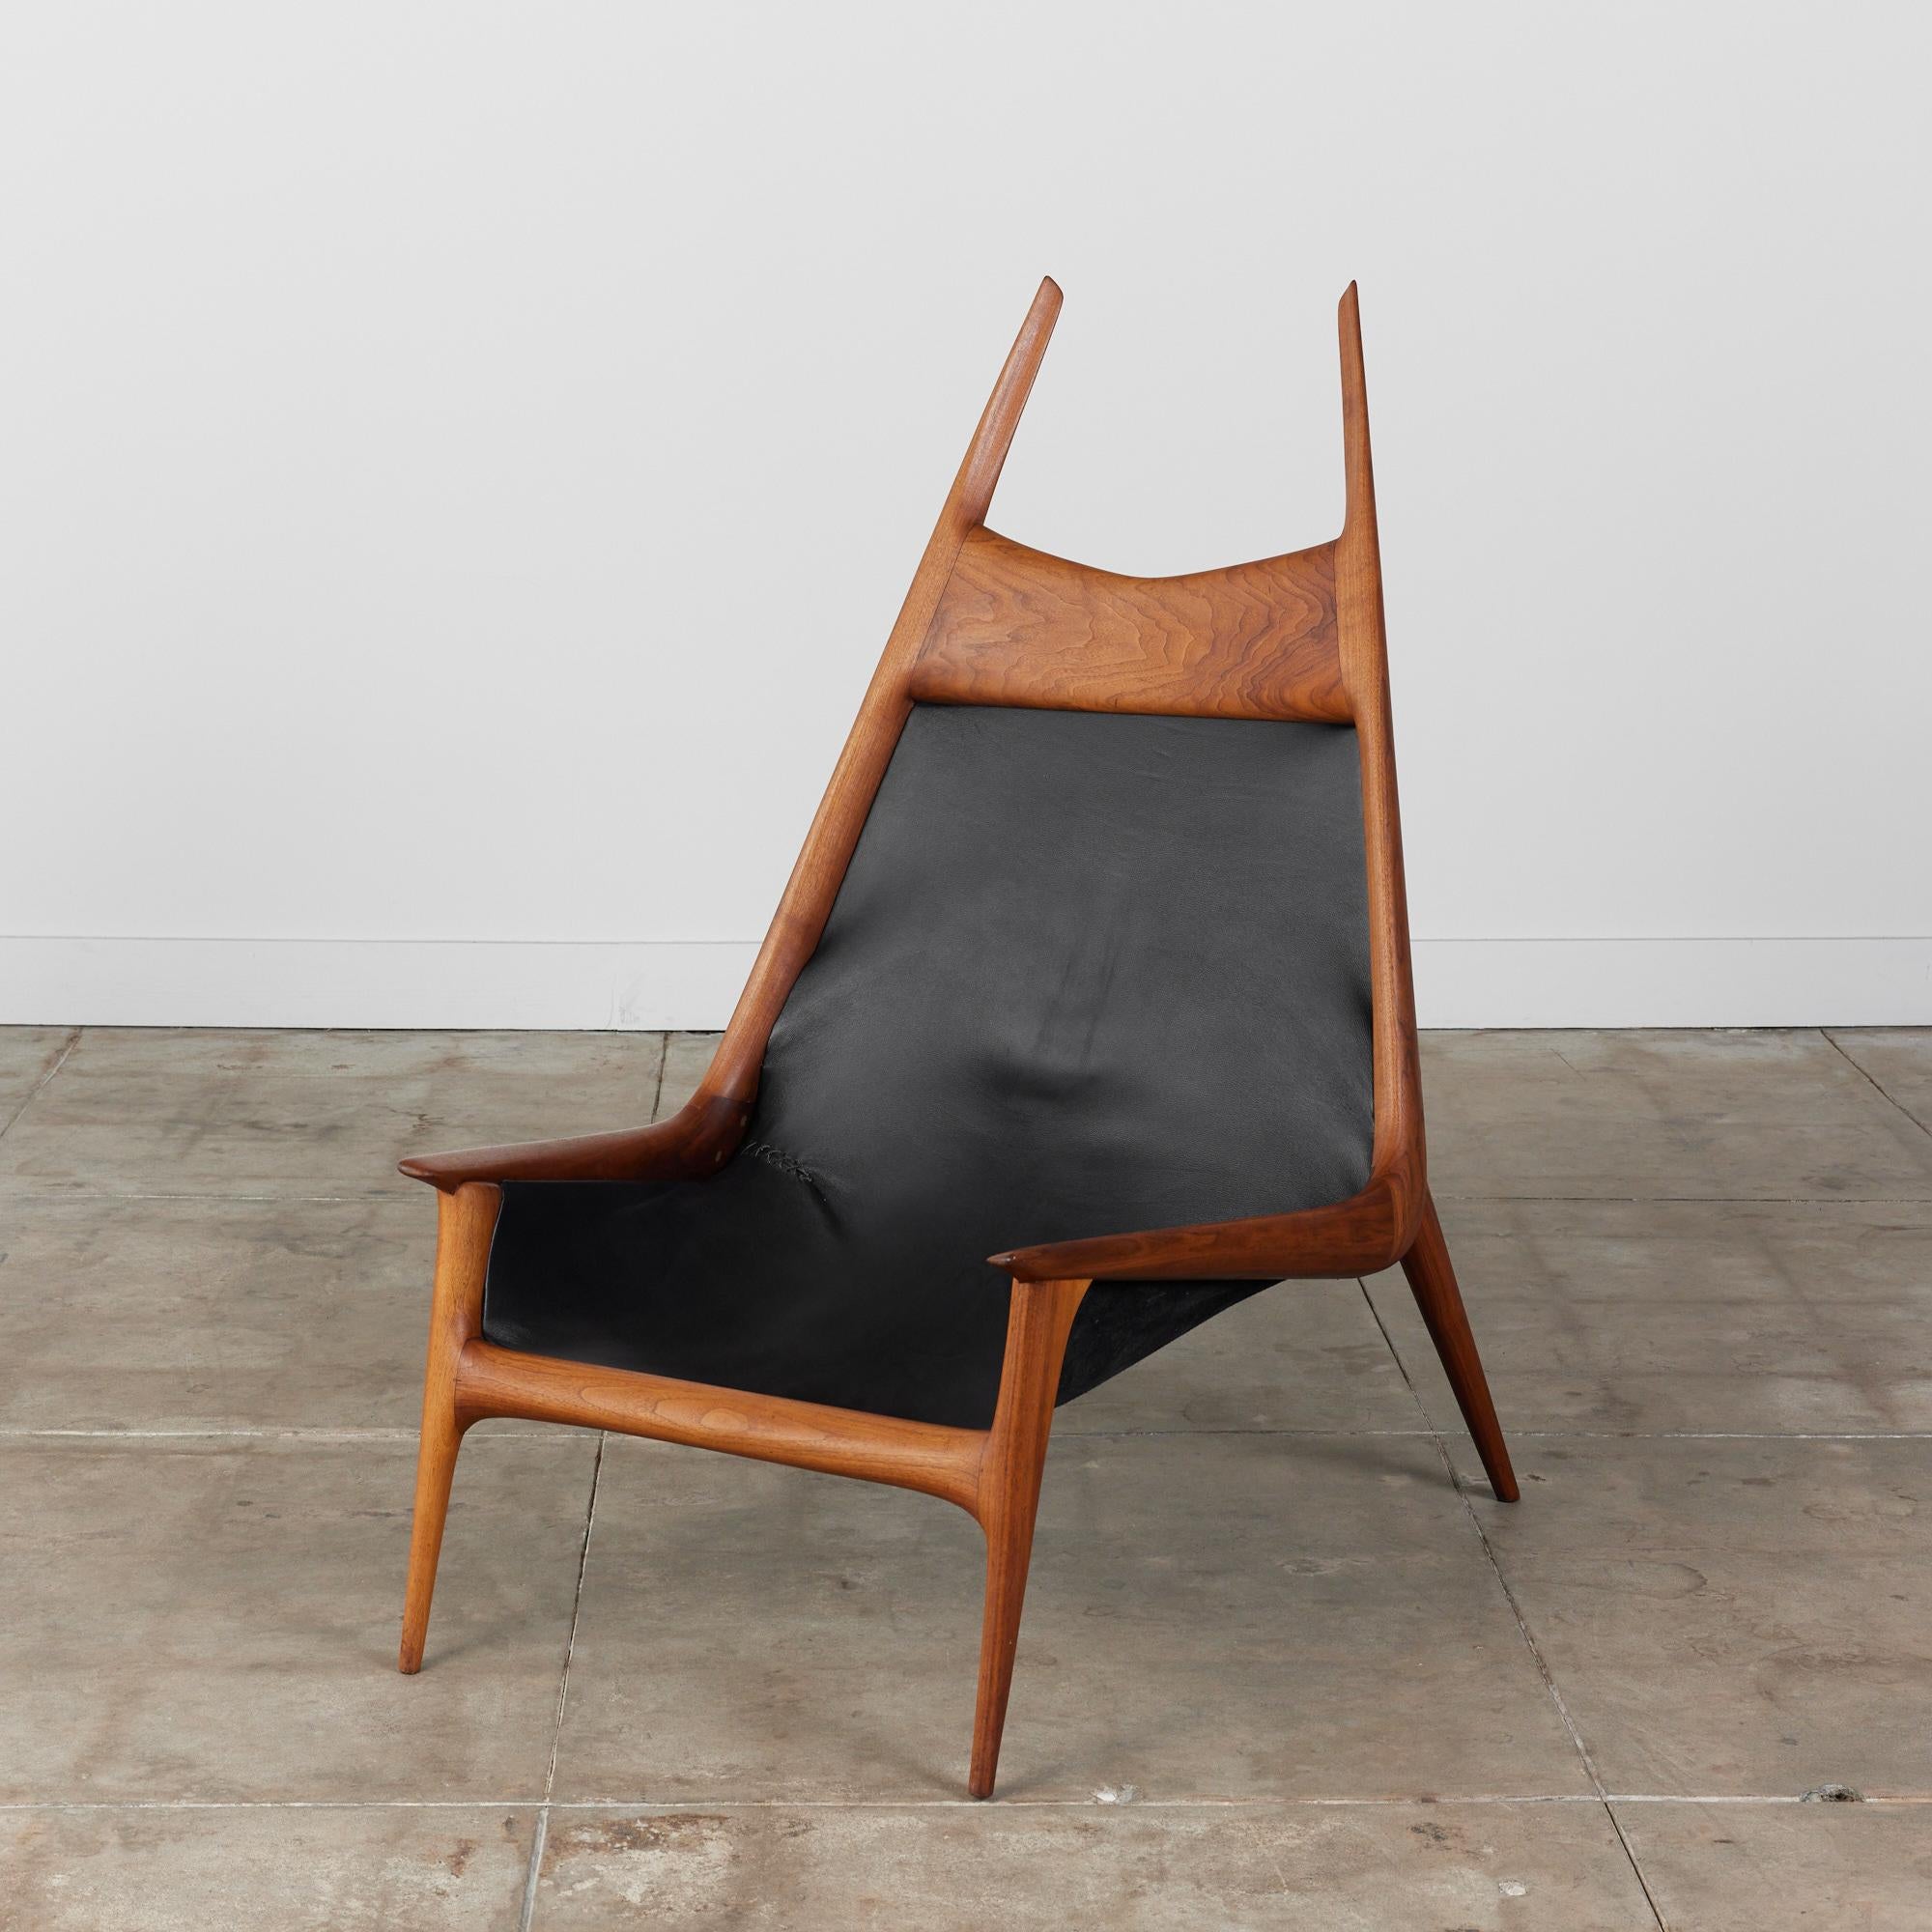 Studio Craft lounge chair by master craftsman, John Karpilow circa .1960, USA. The Bay Area artisan created this impressive piece known as the 